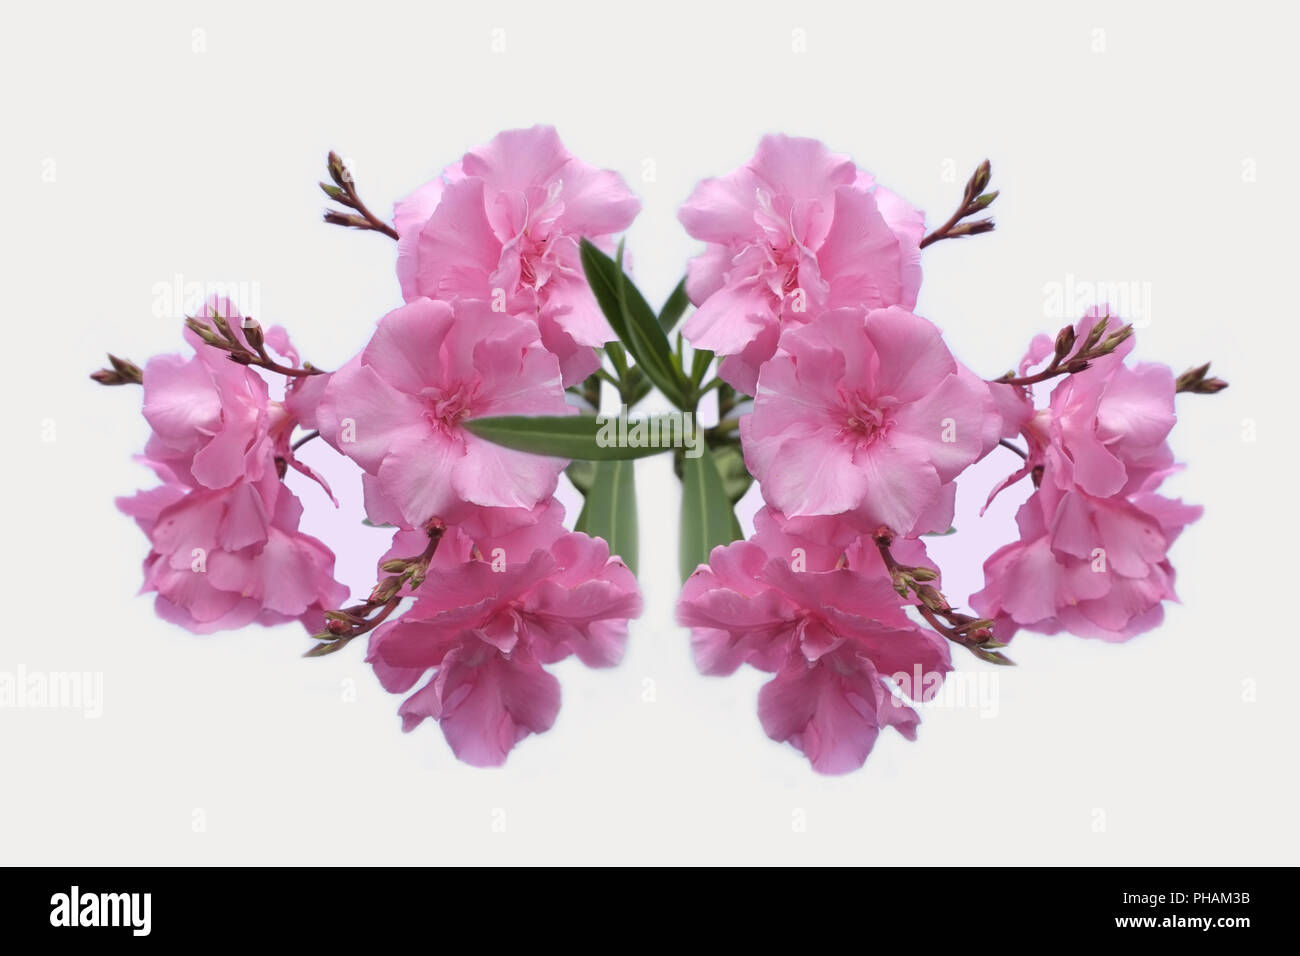 Flower arrangement with oleander blossoms Stock Photo